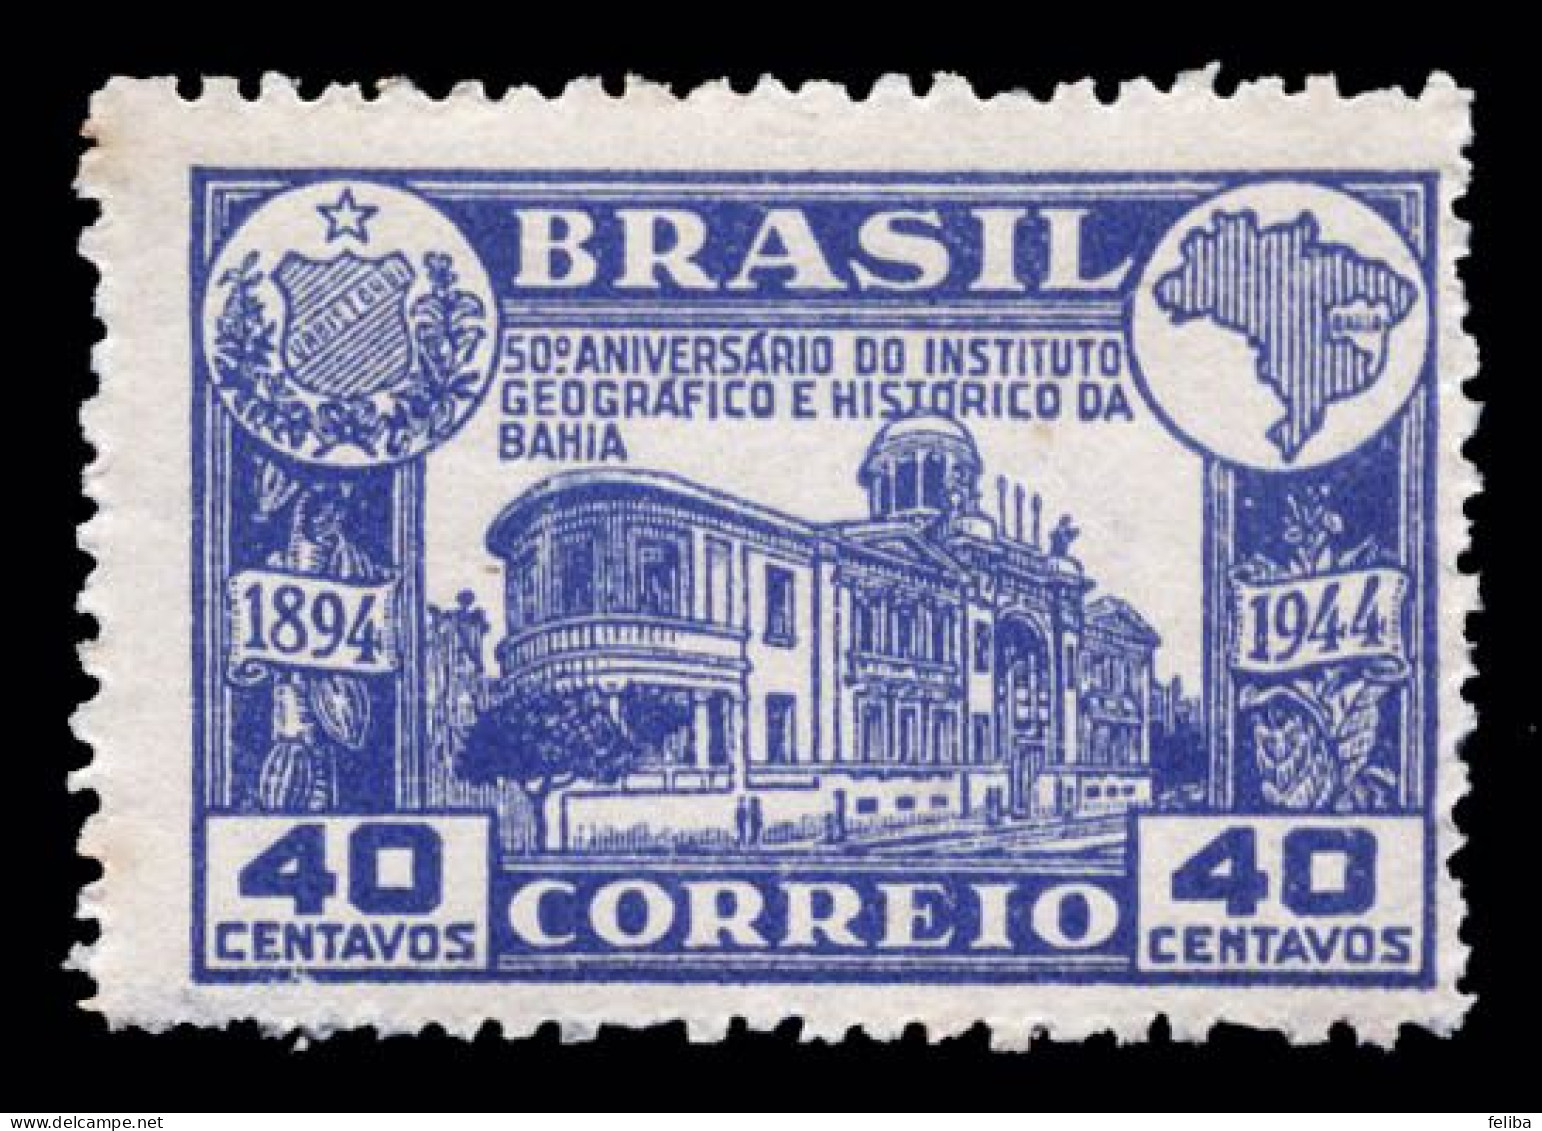 Brazil 1945 Unused - Neufs